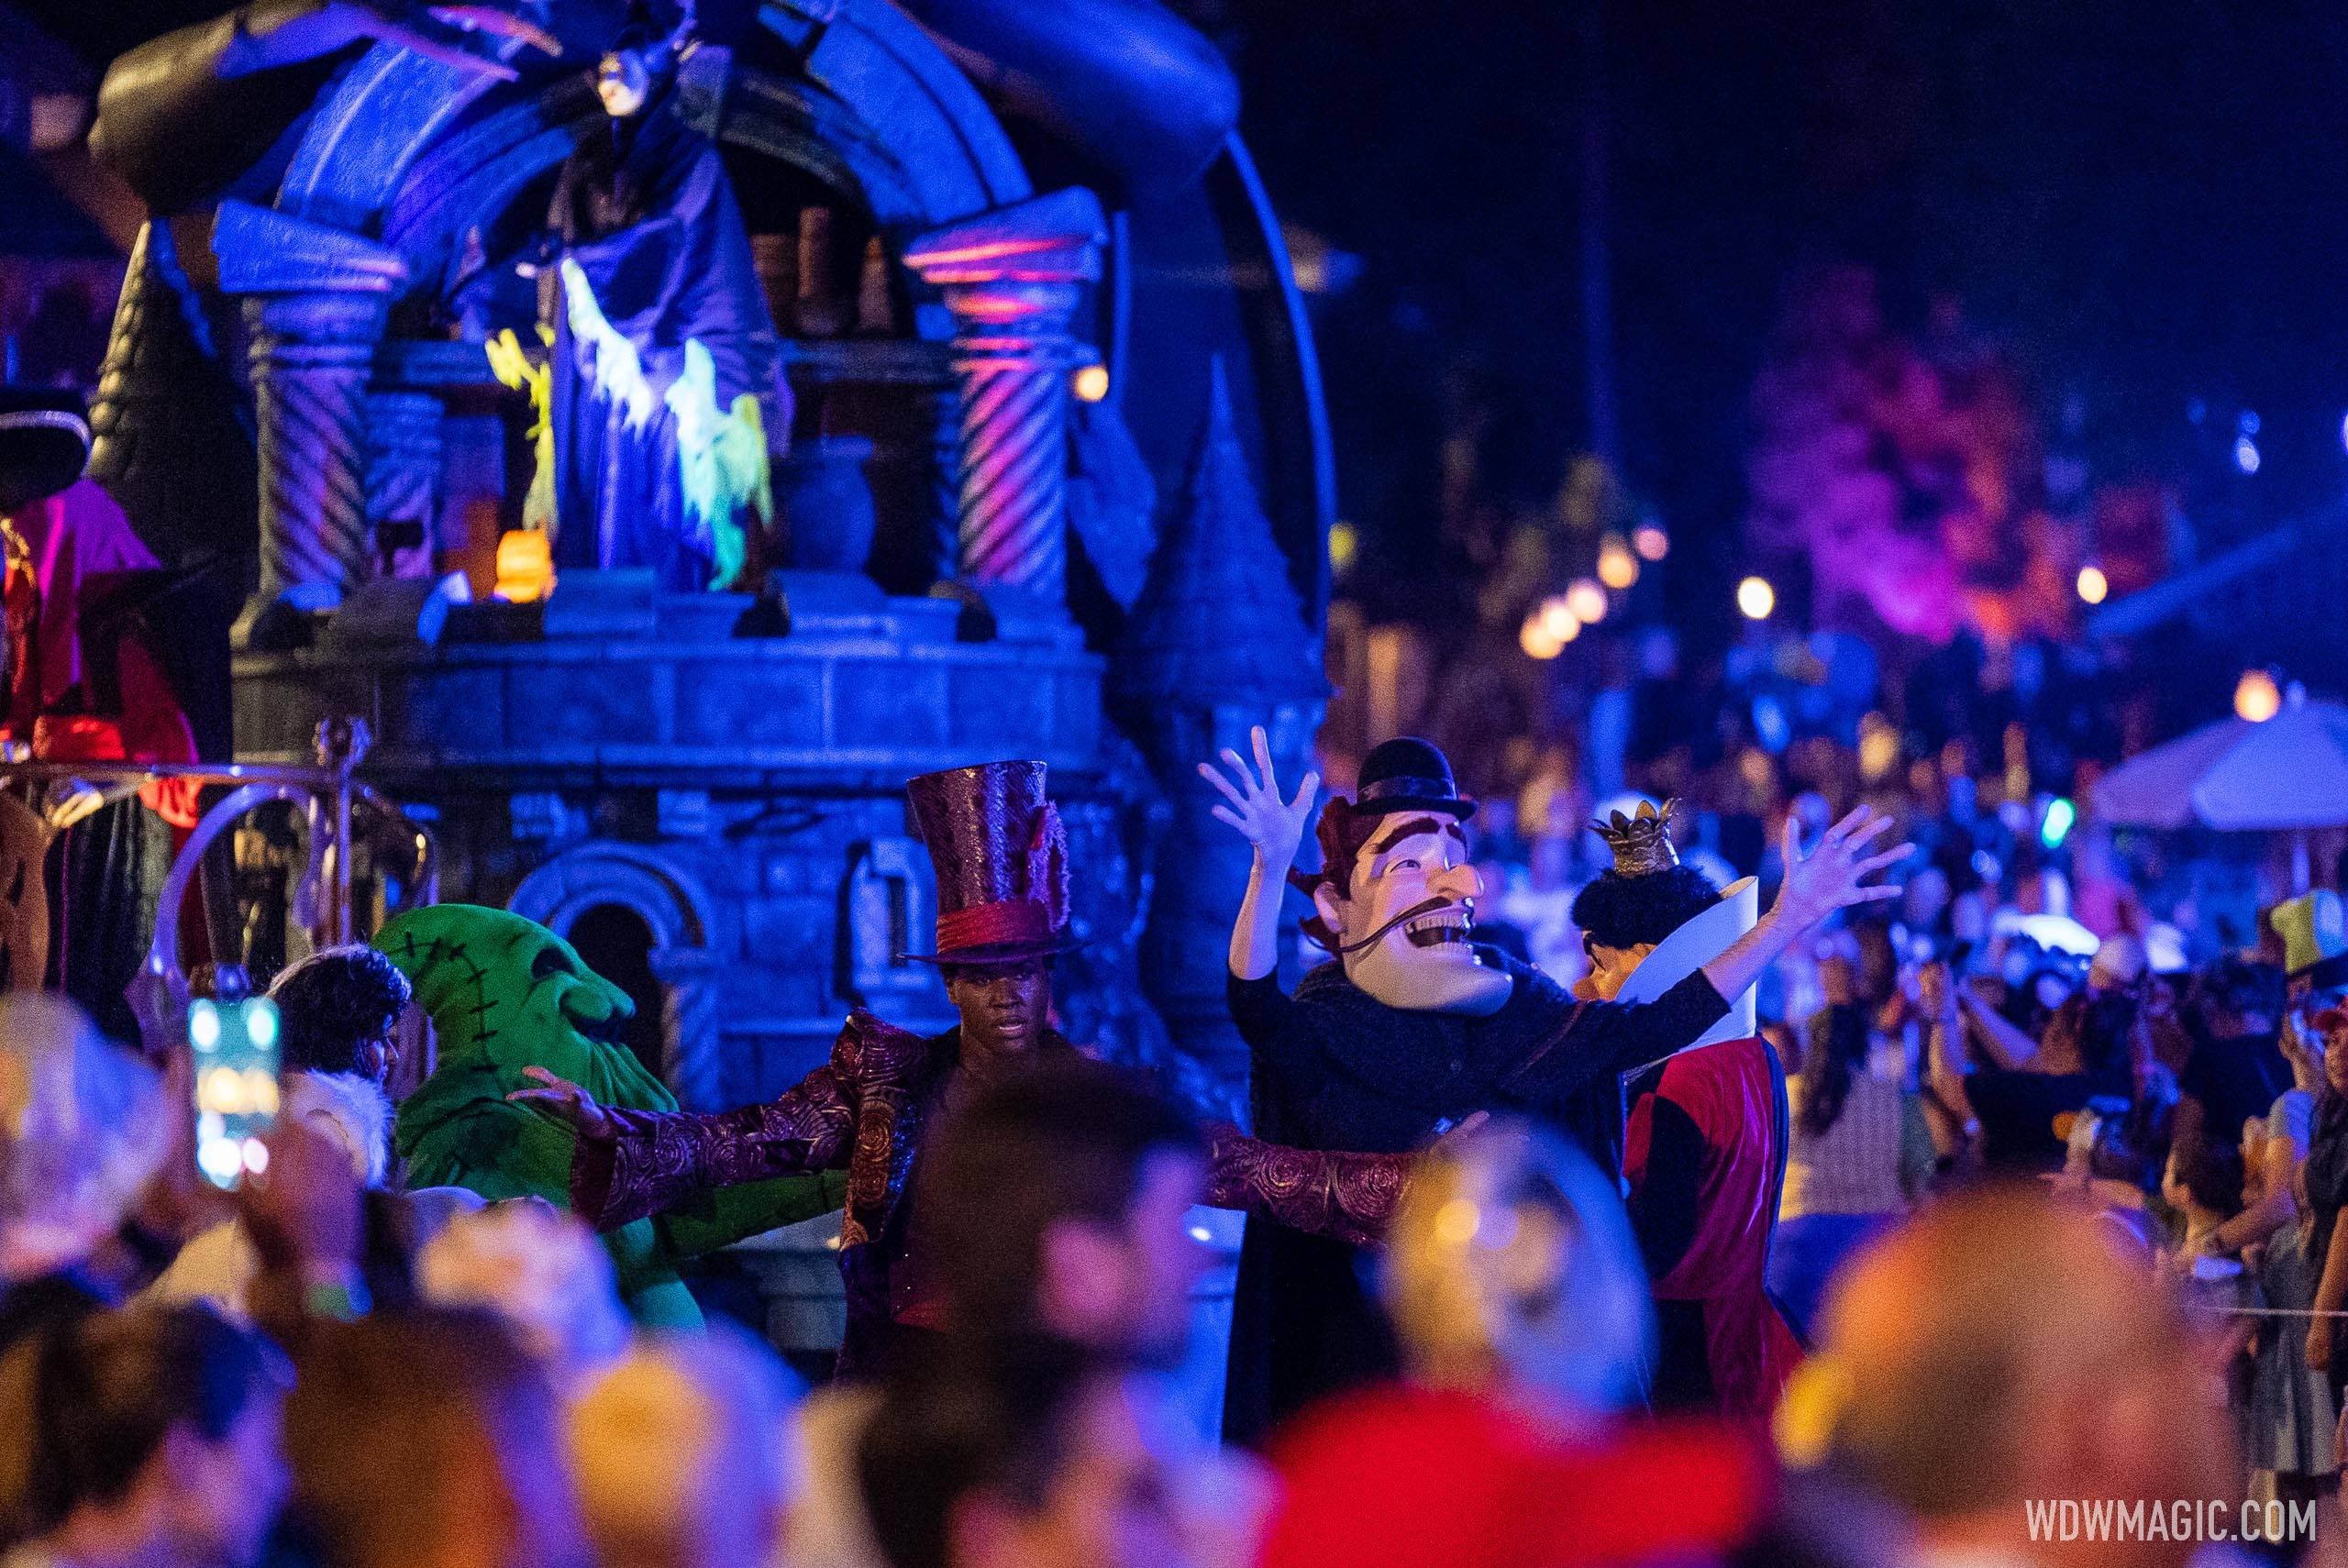 Mickey’s Boo-to-You Halloween Parade